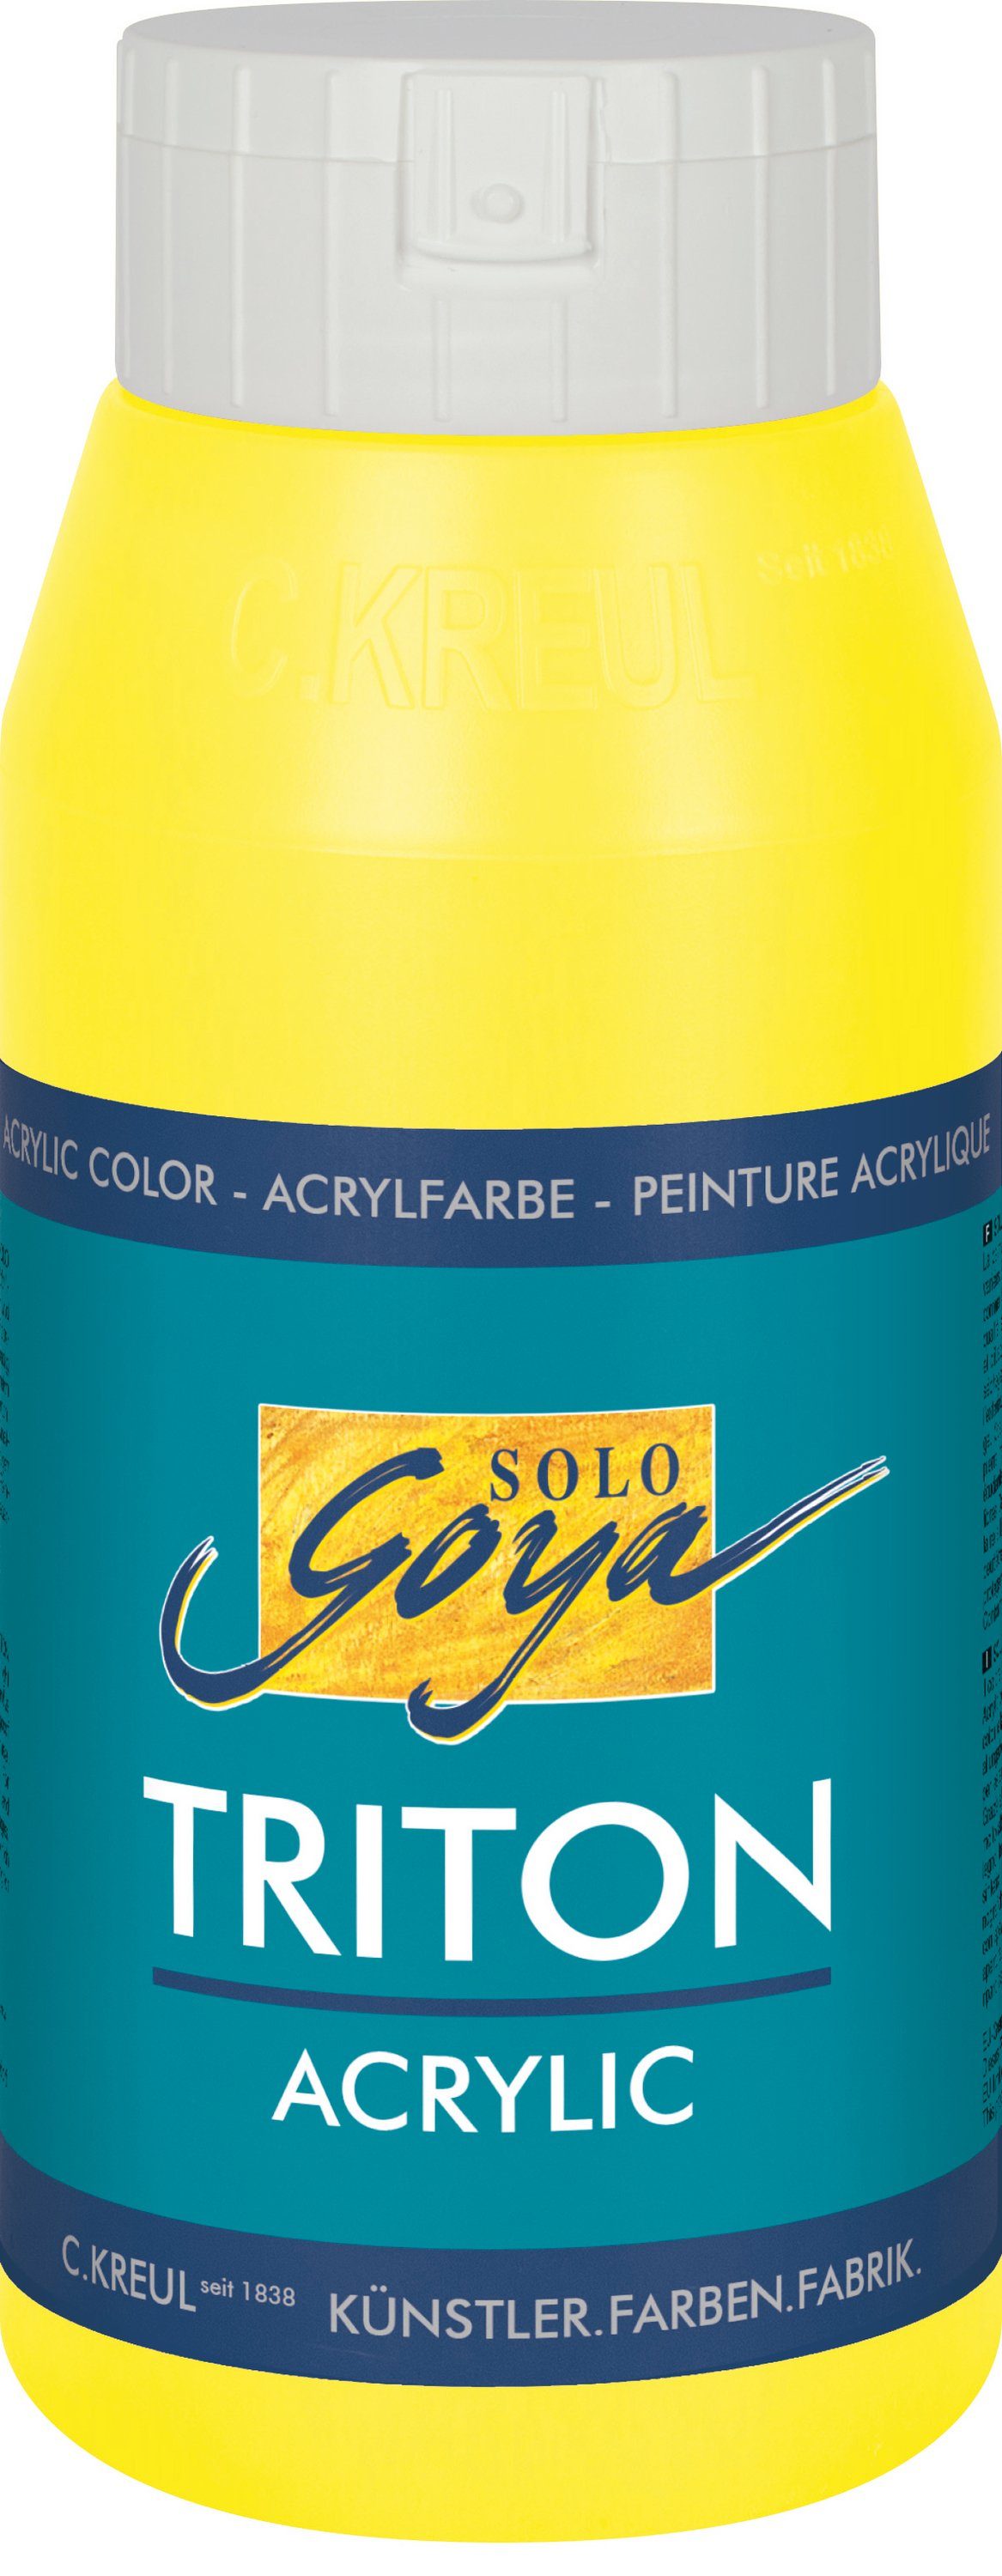 Kreul Acrylfarbe Solo Goya Triton Acrylic, 750 ml Zitrone